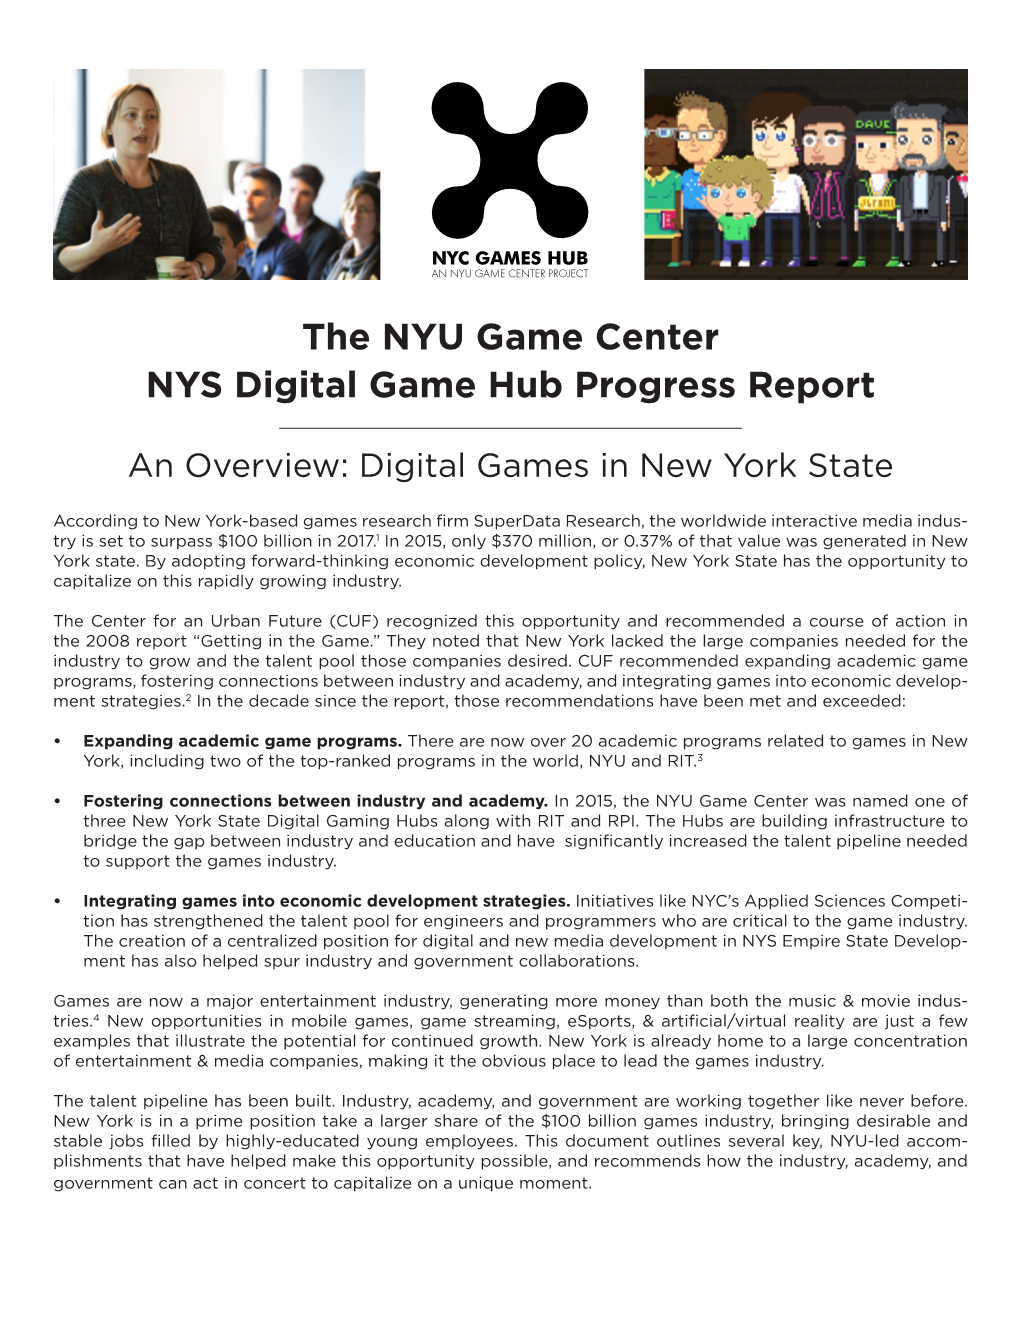 The NYU Game Center NYS Digital Game Hub Progress Report